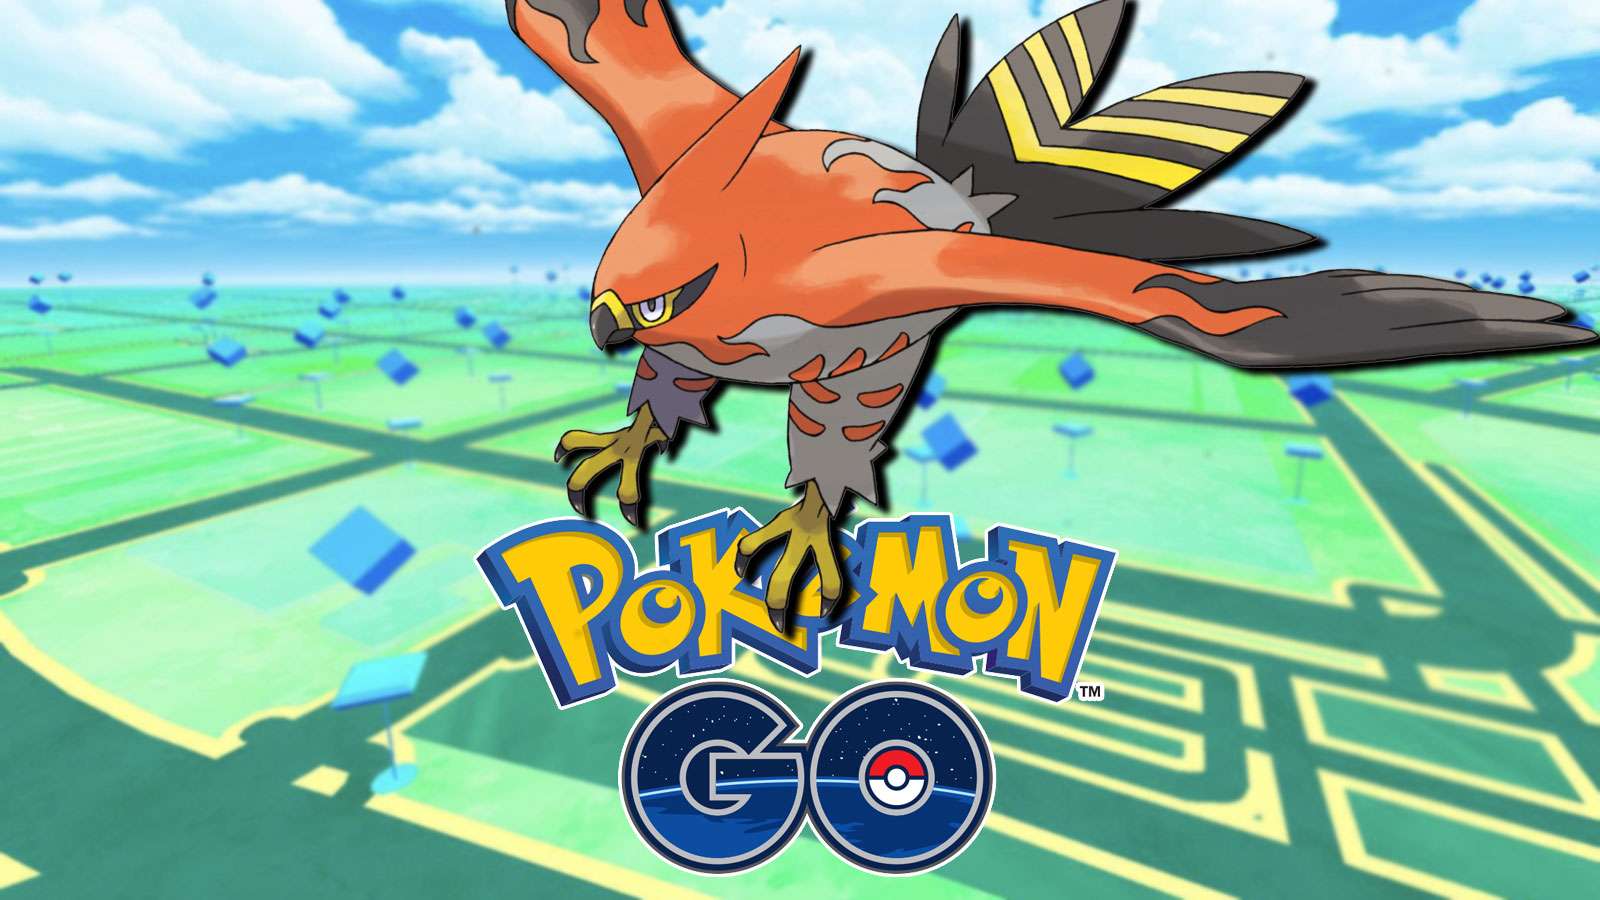 Screenshot of Talonflame flying over Pokemon Go logo.